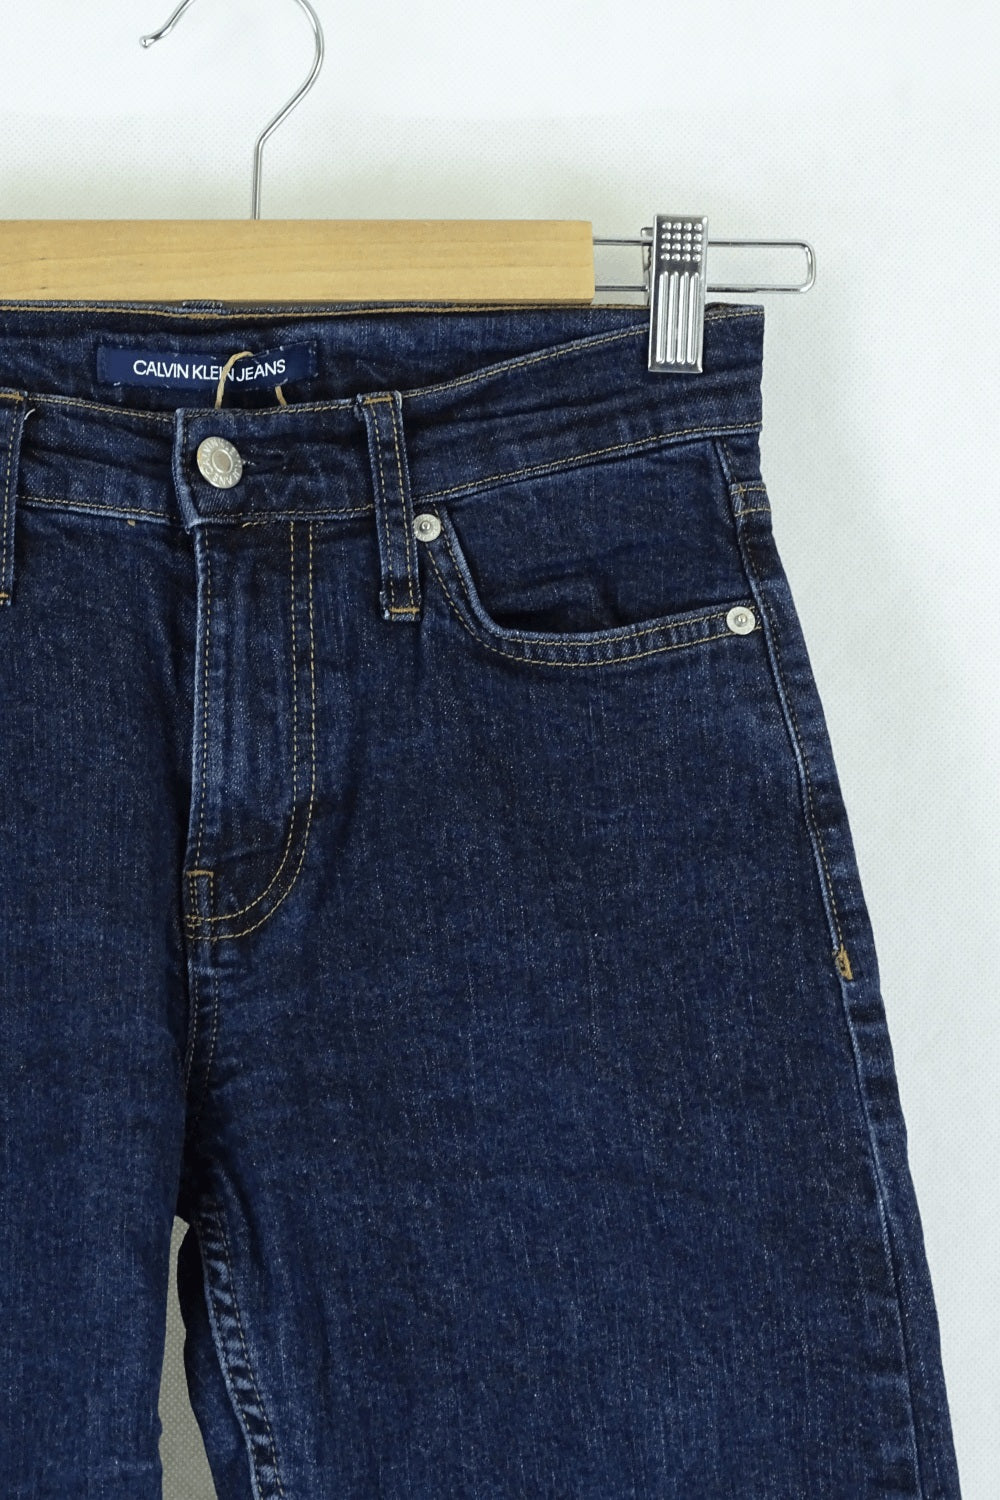 Calvin Klein Jeans 25 x 32